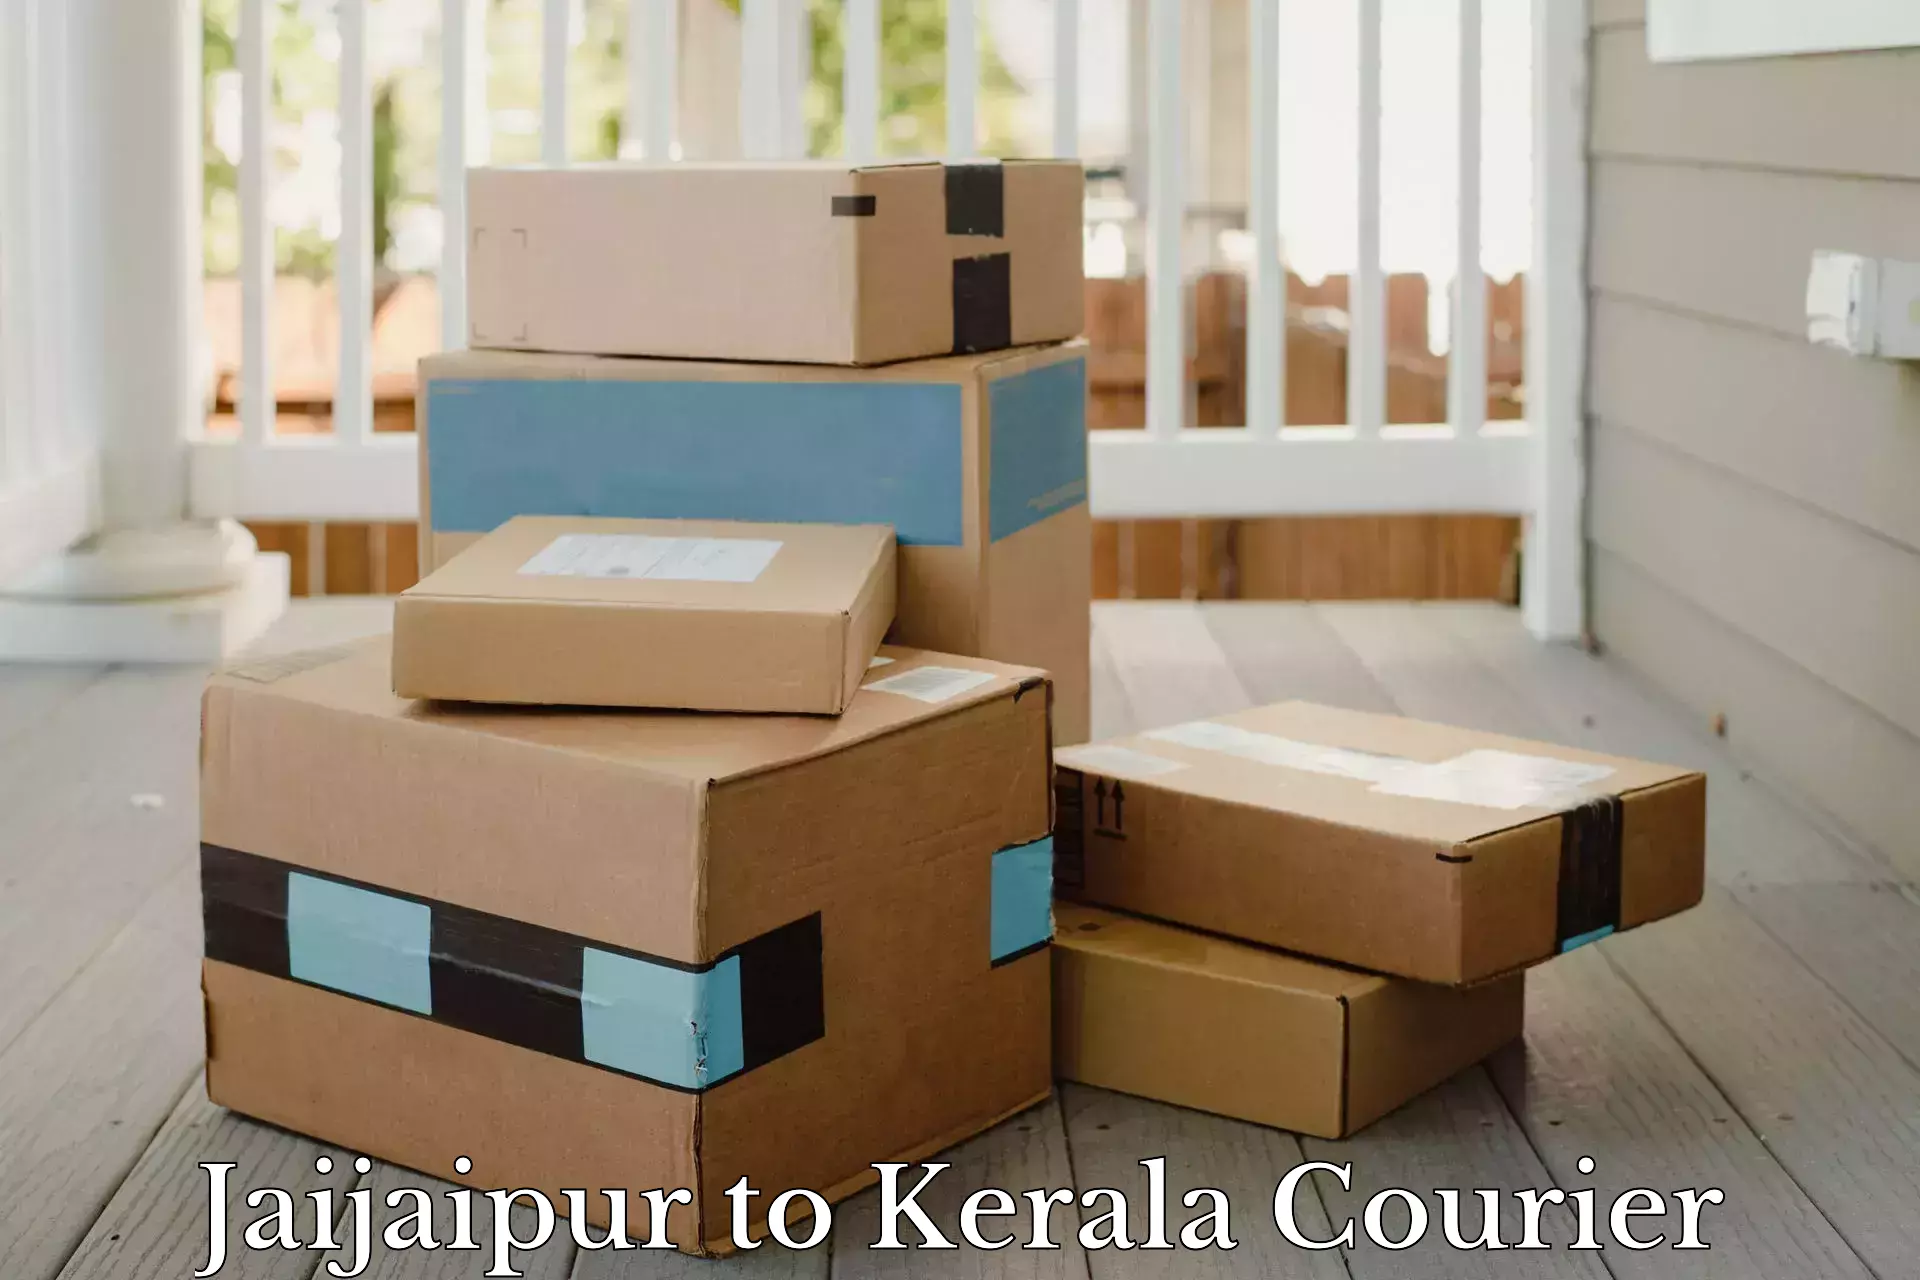 On-demand courier Jaijaipur to Kerala